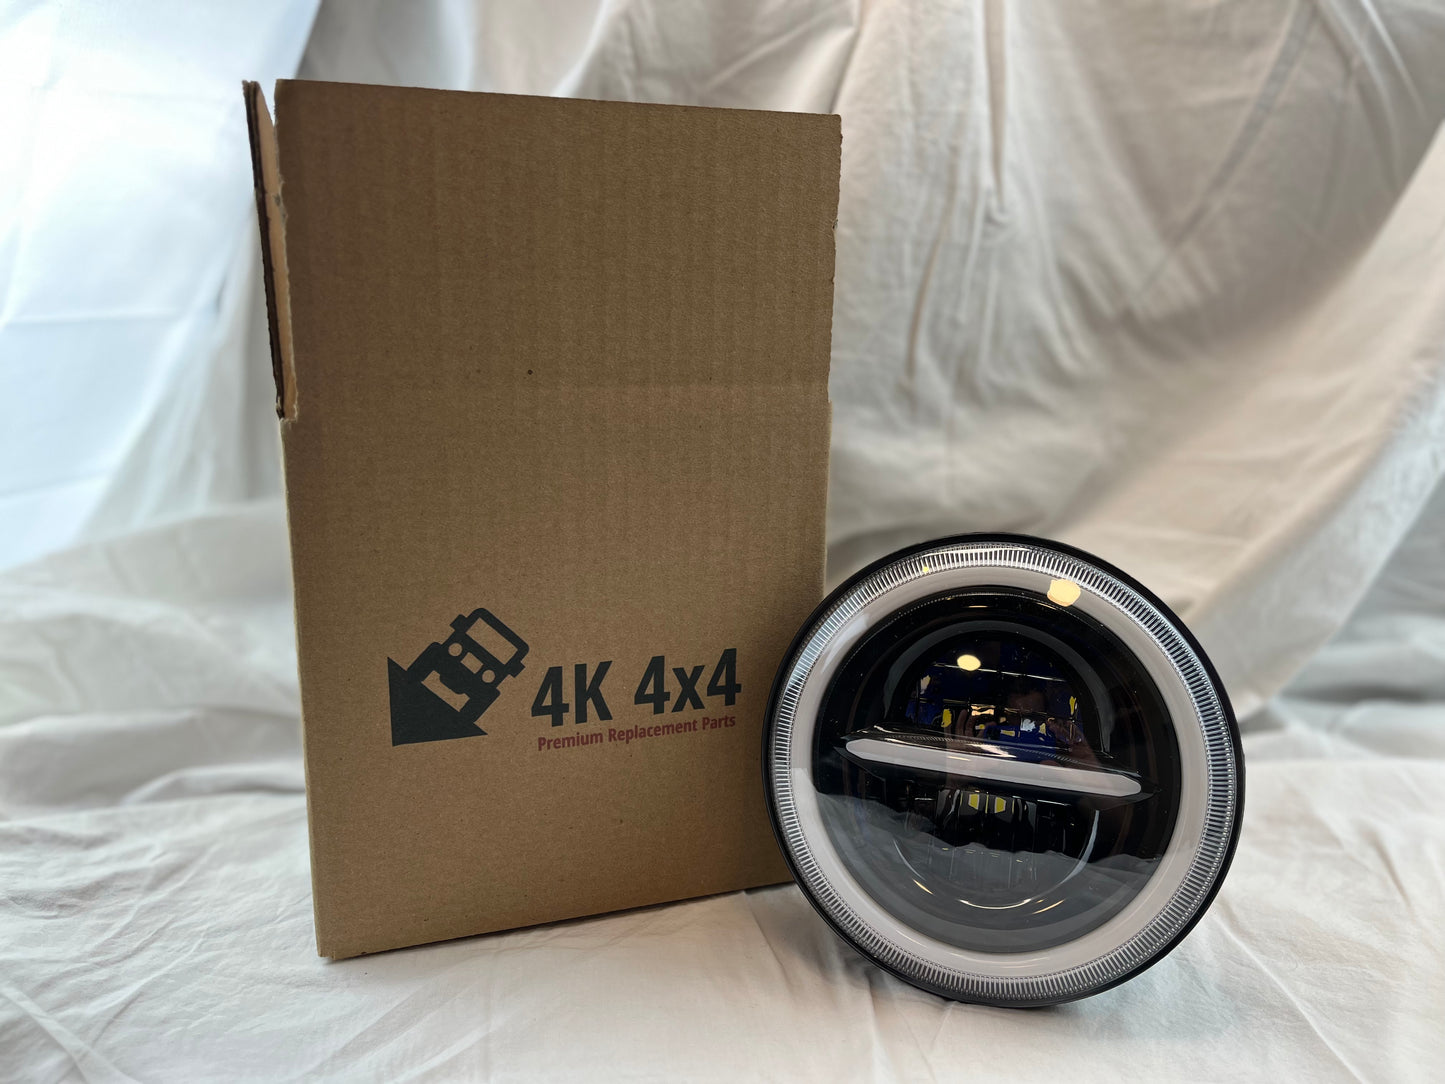 4K 4x4 7-inch LED Closed Eye Headlights